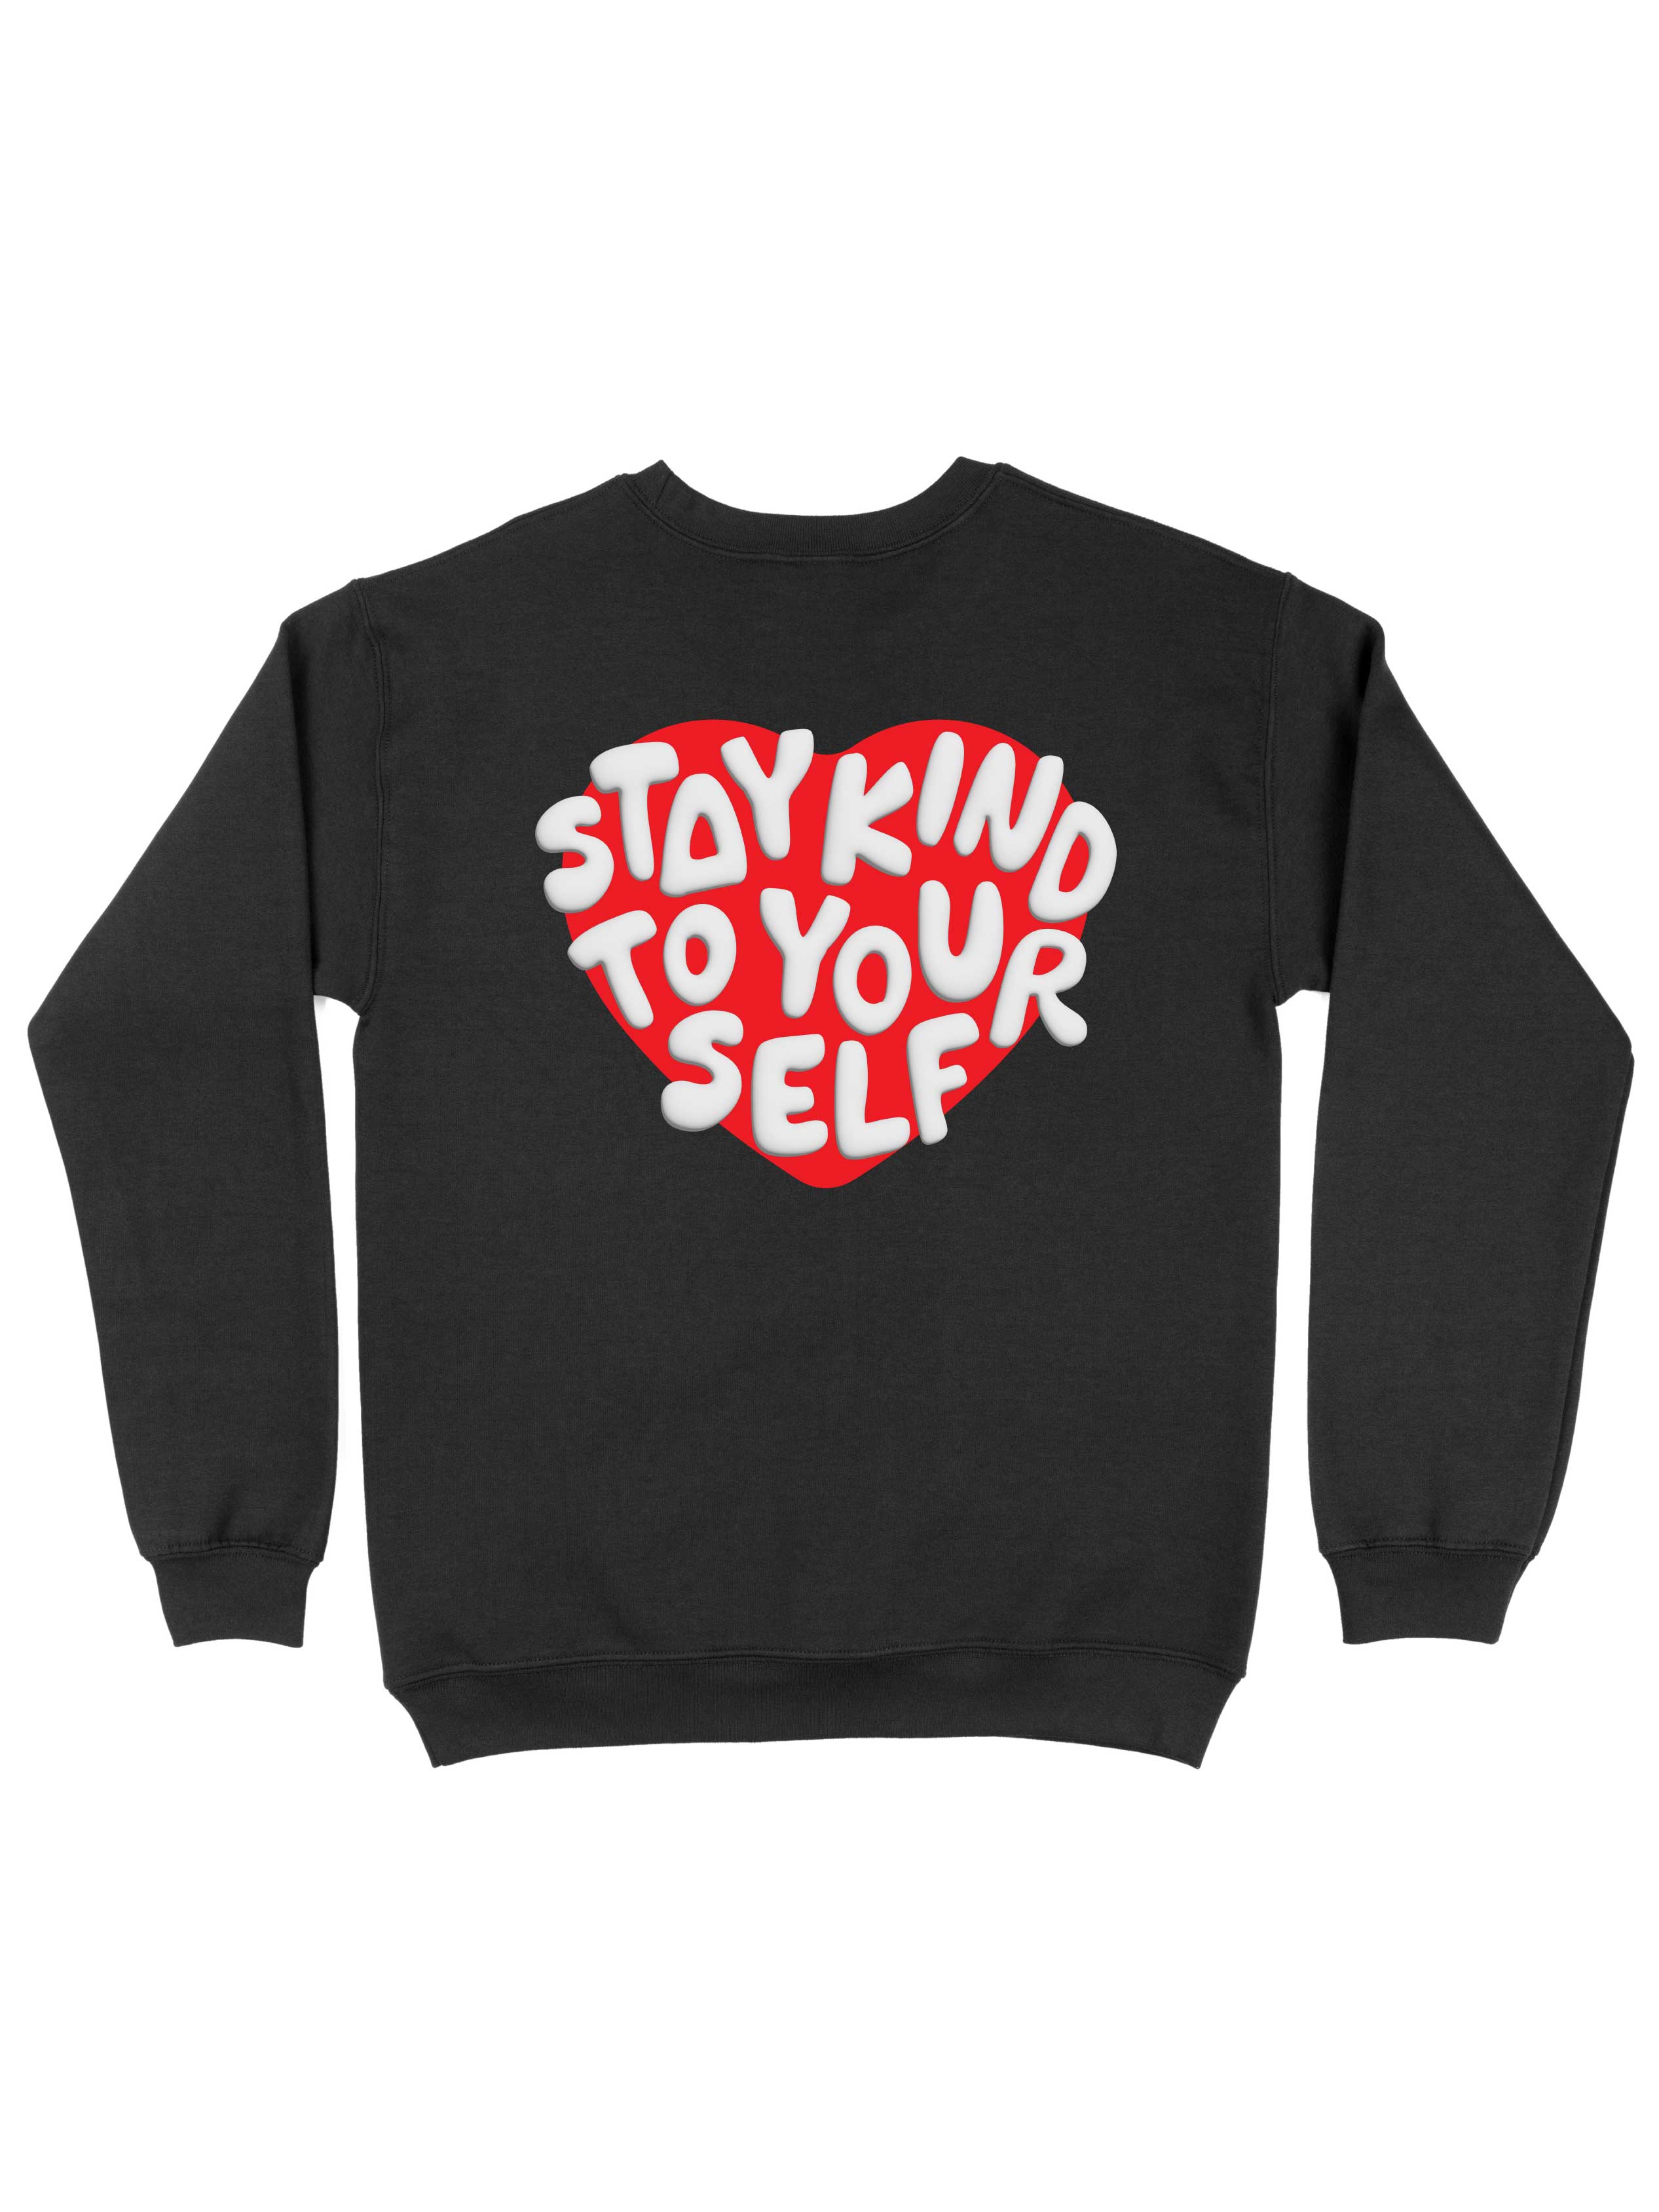 Self Love Sweatshirt - Black